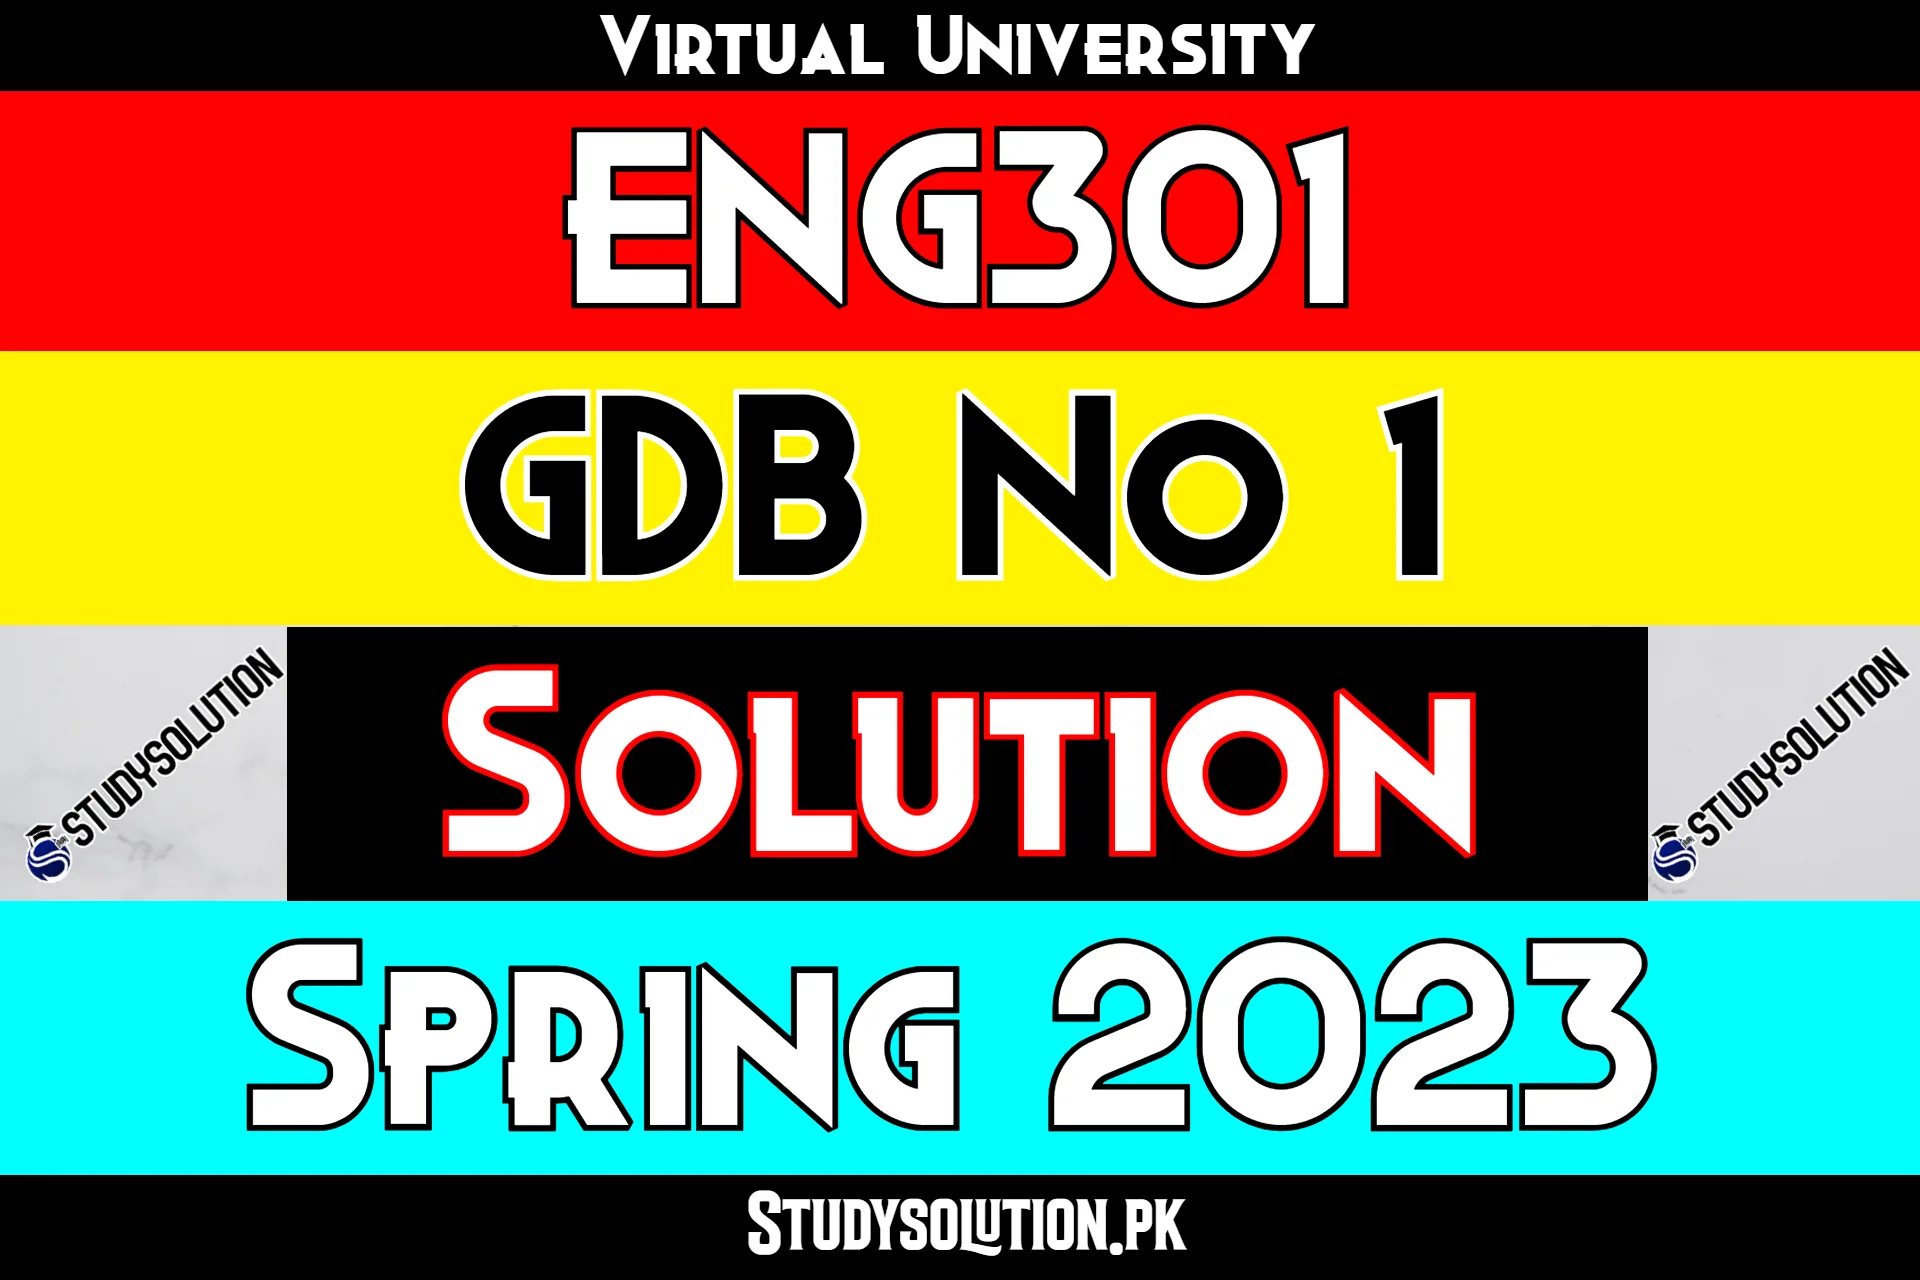 ENG301 GDB No 1 Solution Spring 2023